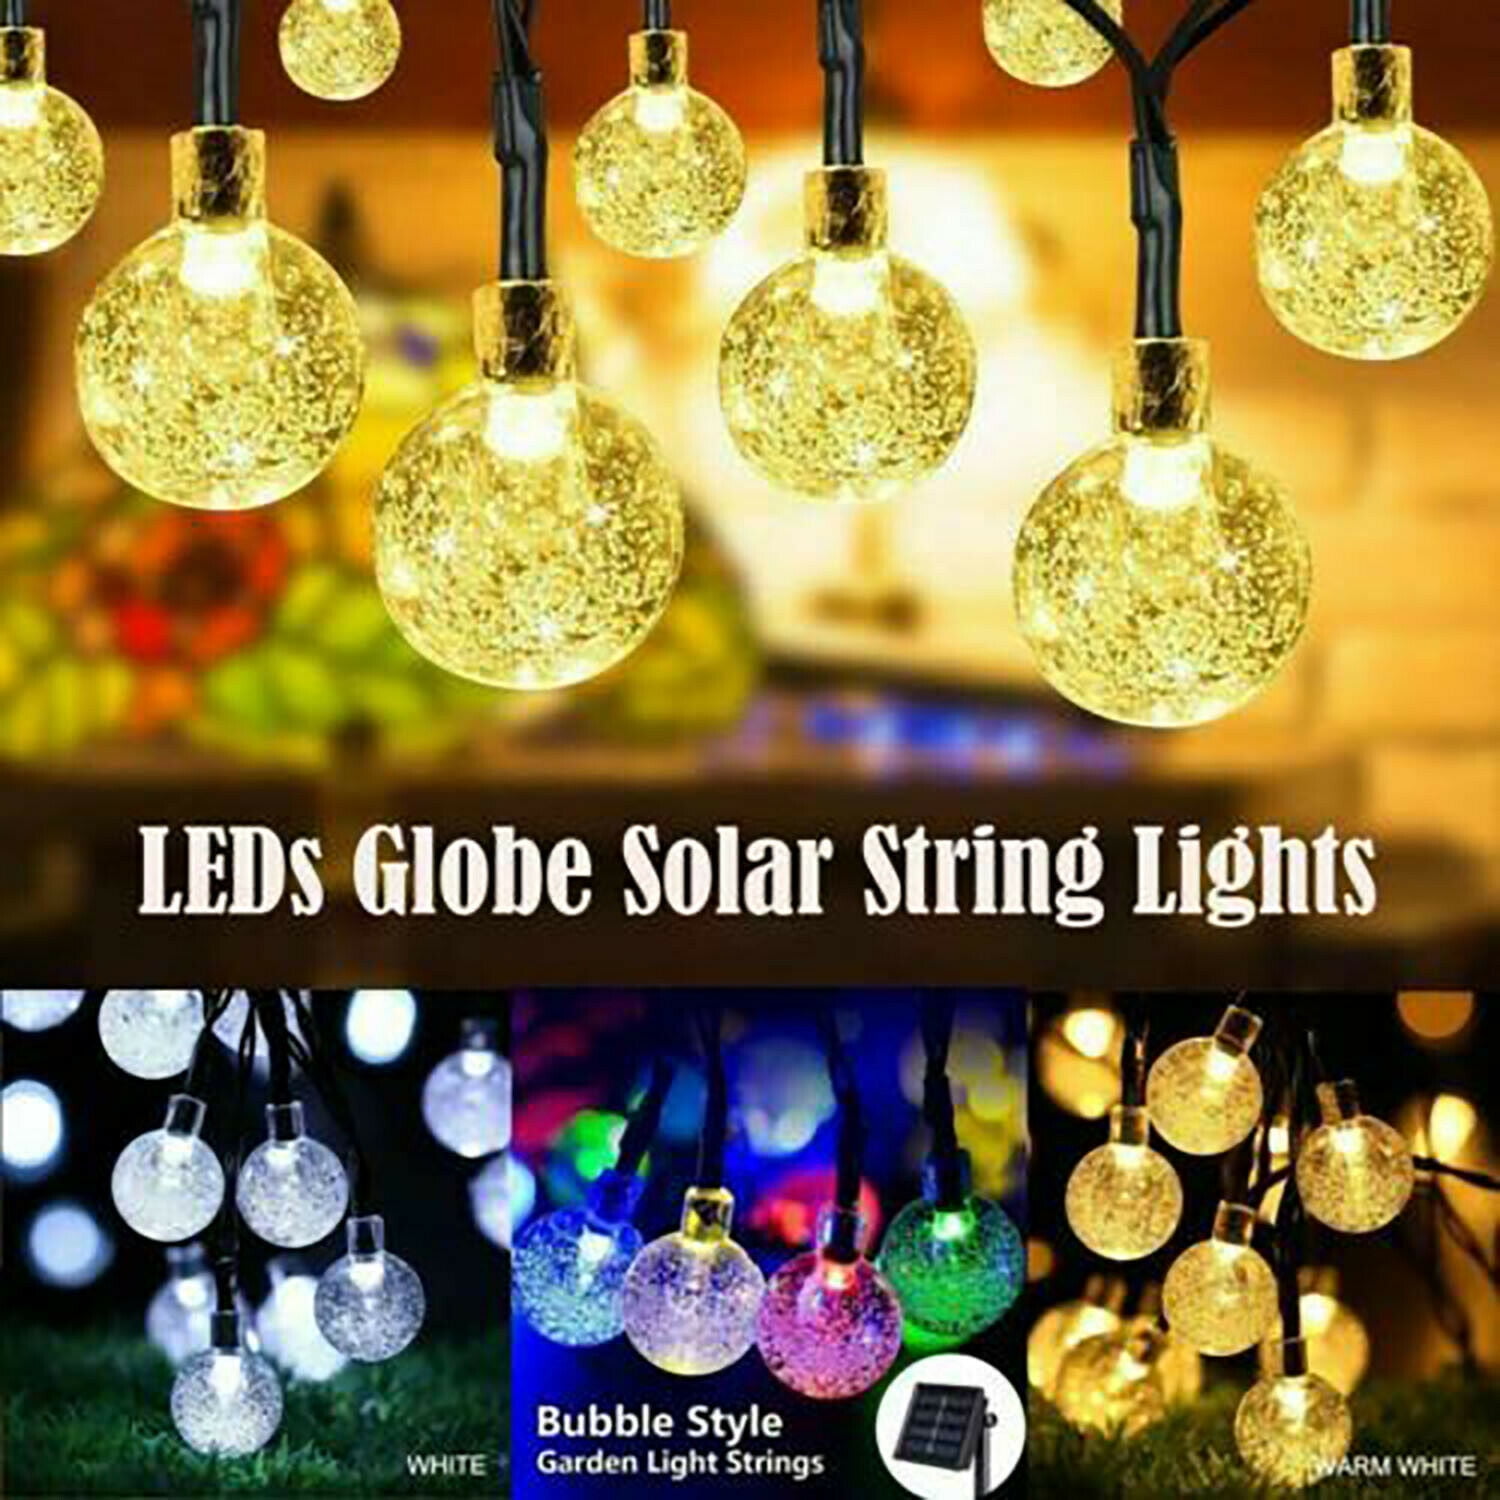 Details about   Solar Retro Ball String Lights Outdoor Garden LED Festoon Party Globe Bulb Light 